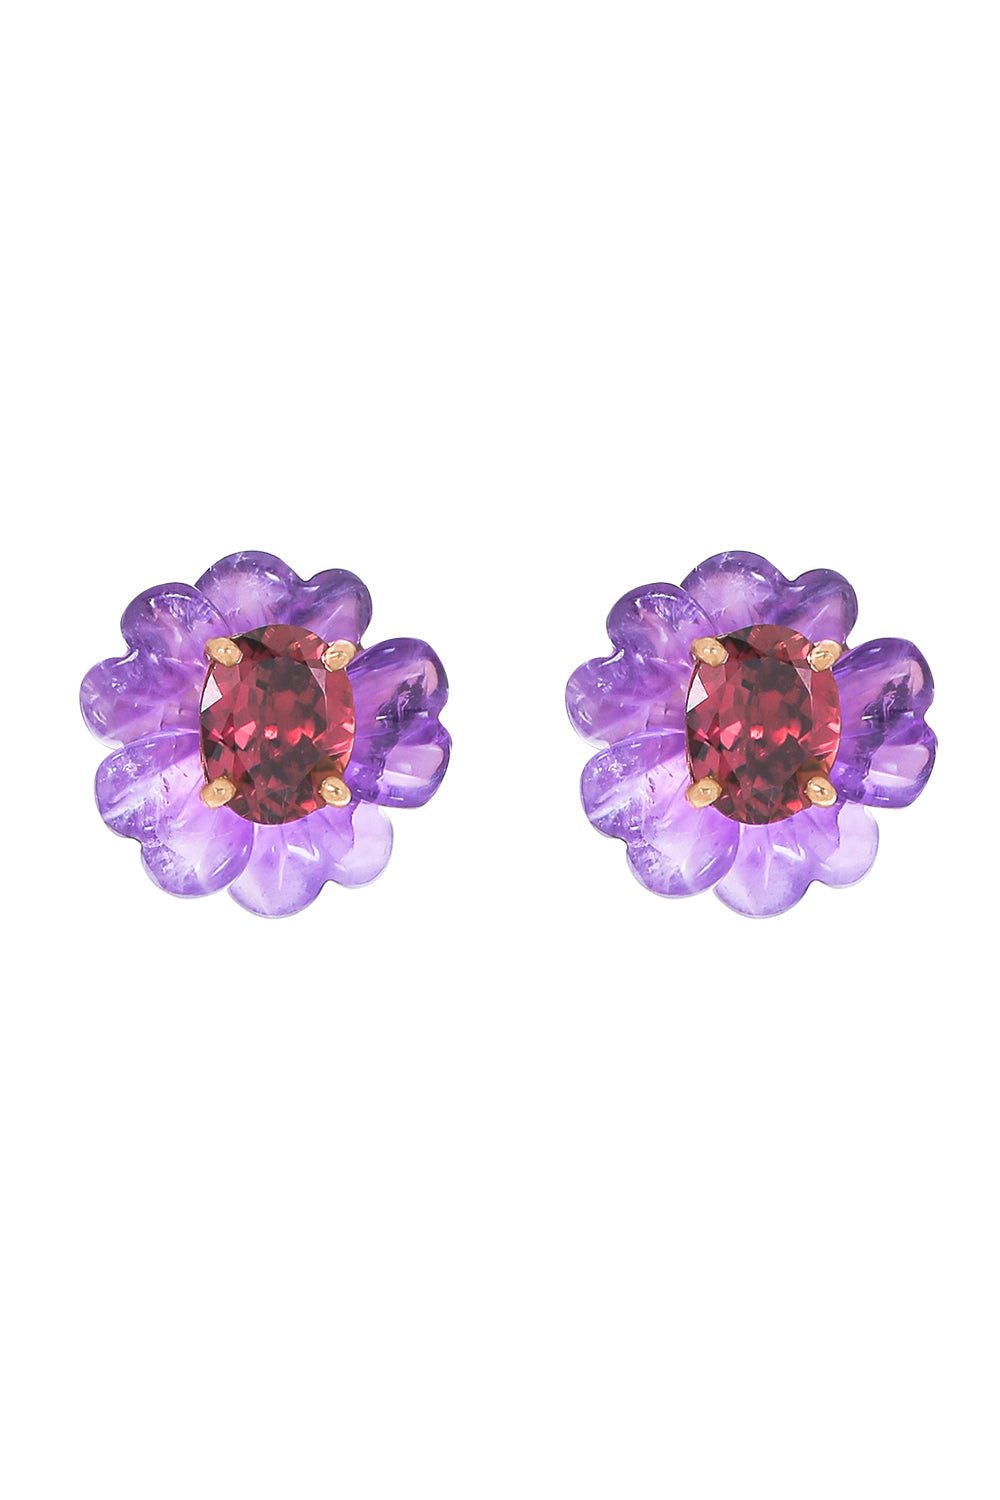 IRENE NEUWIRTH JEWELRY-Tropical Flower Stud Earrings-ROSE GOLD